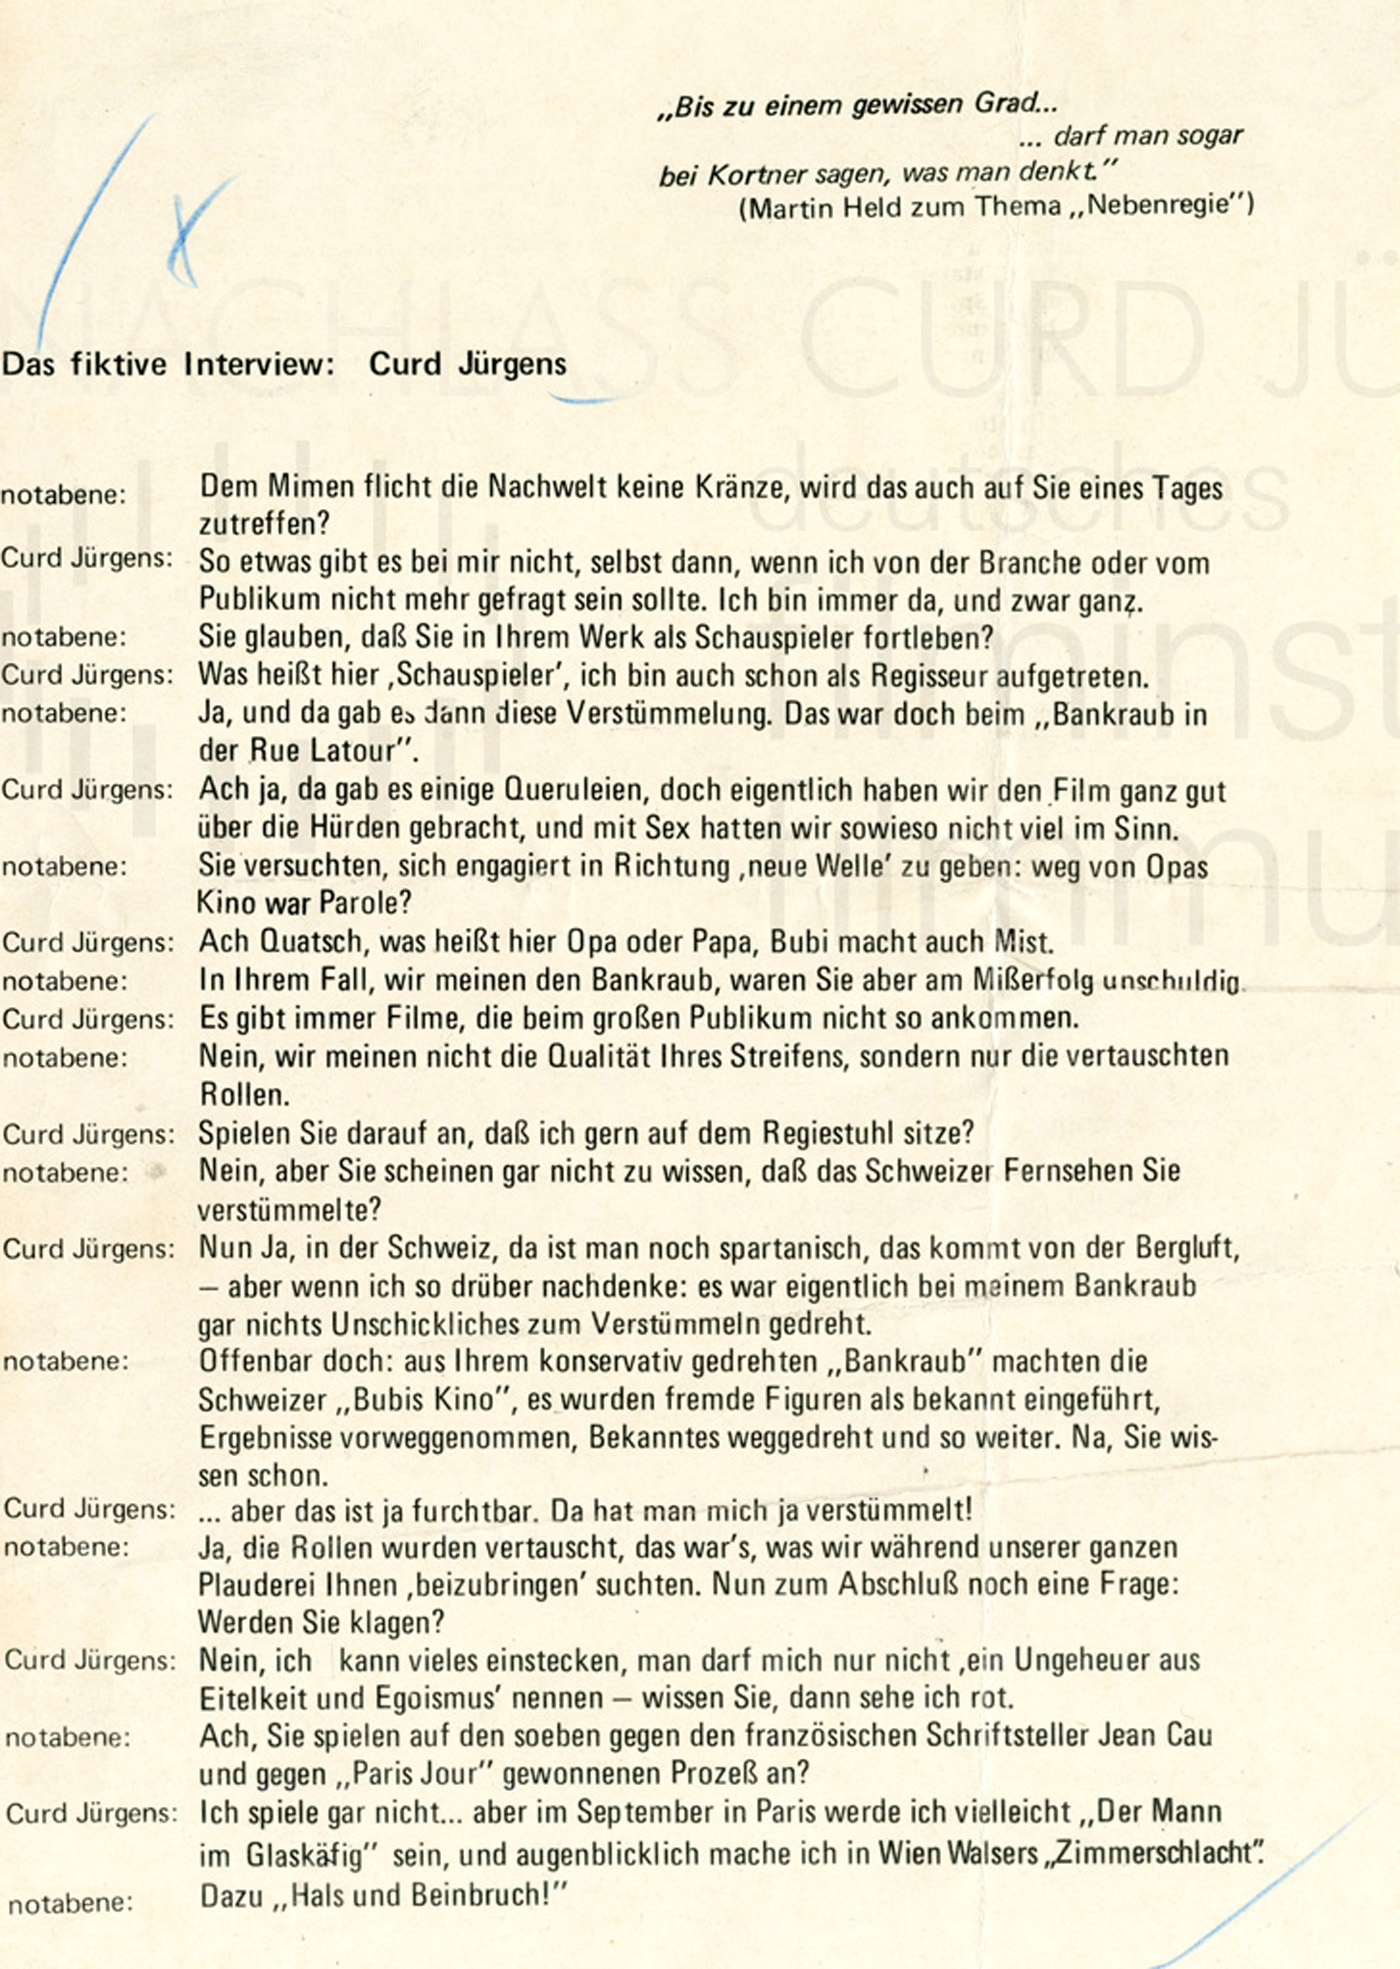 "Das fiktive Interview: Curd Jürgens", 1969